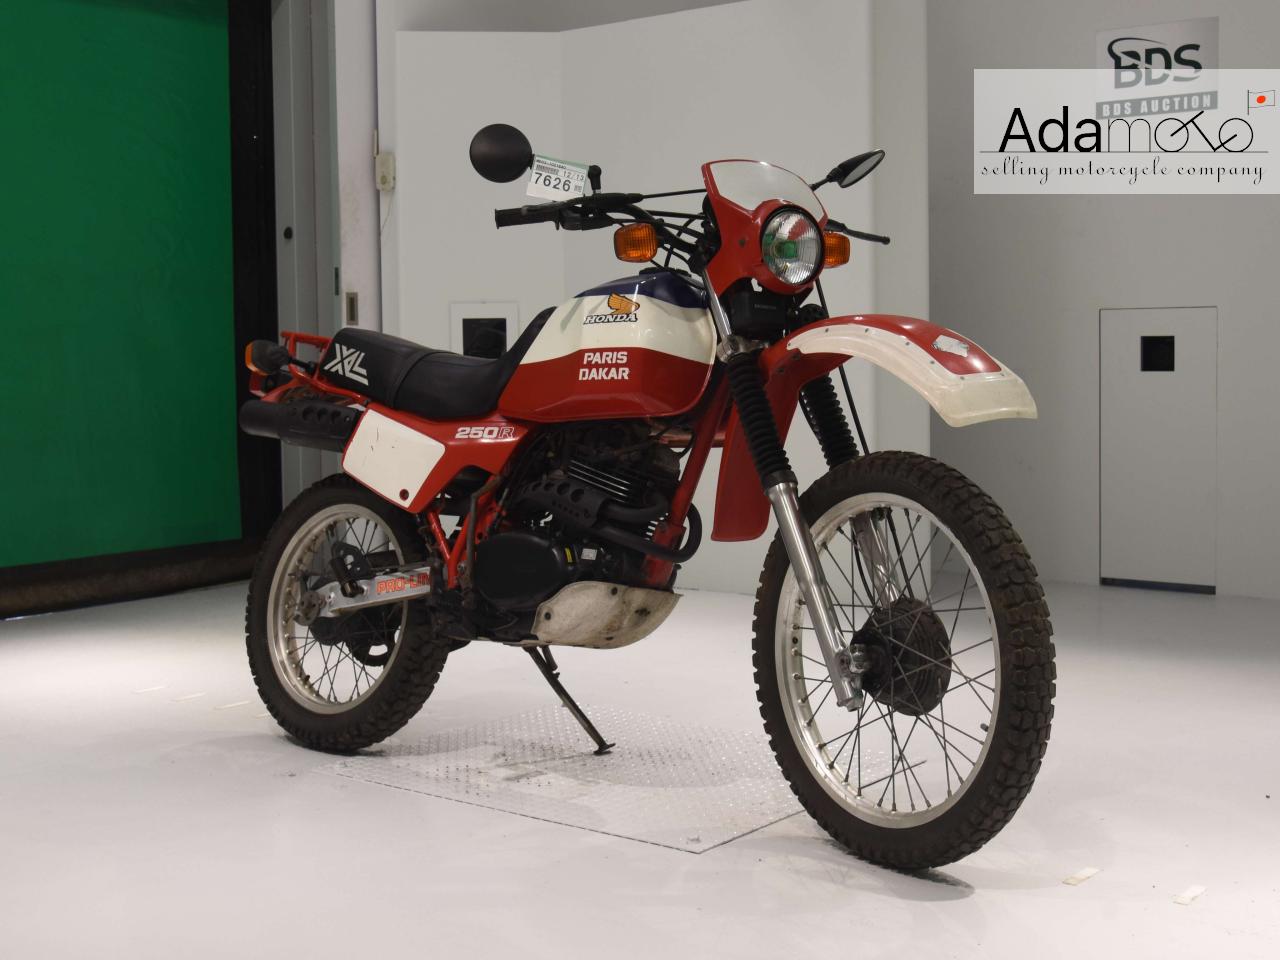 Honda XL250R PARIS DAKAR - Adamoto - Motorcycles from Japan